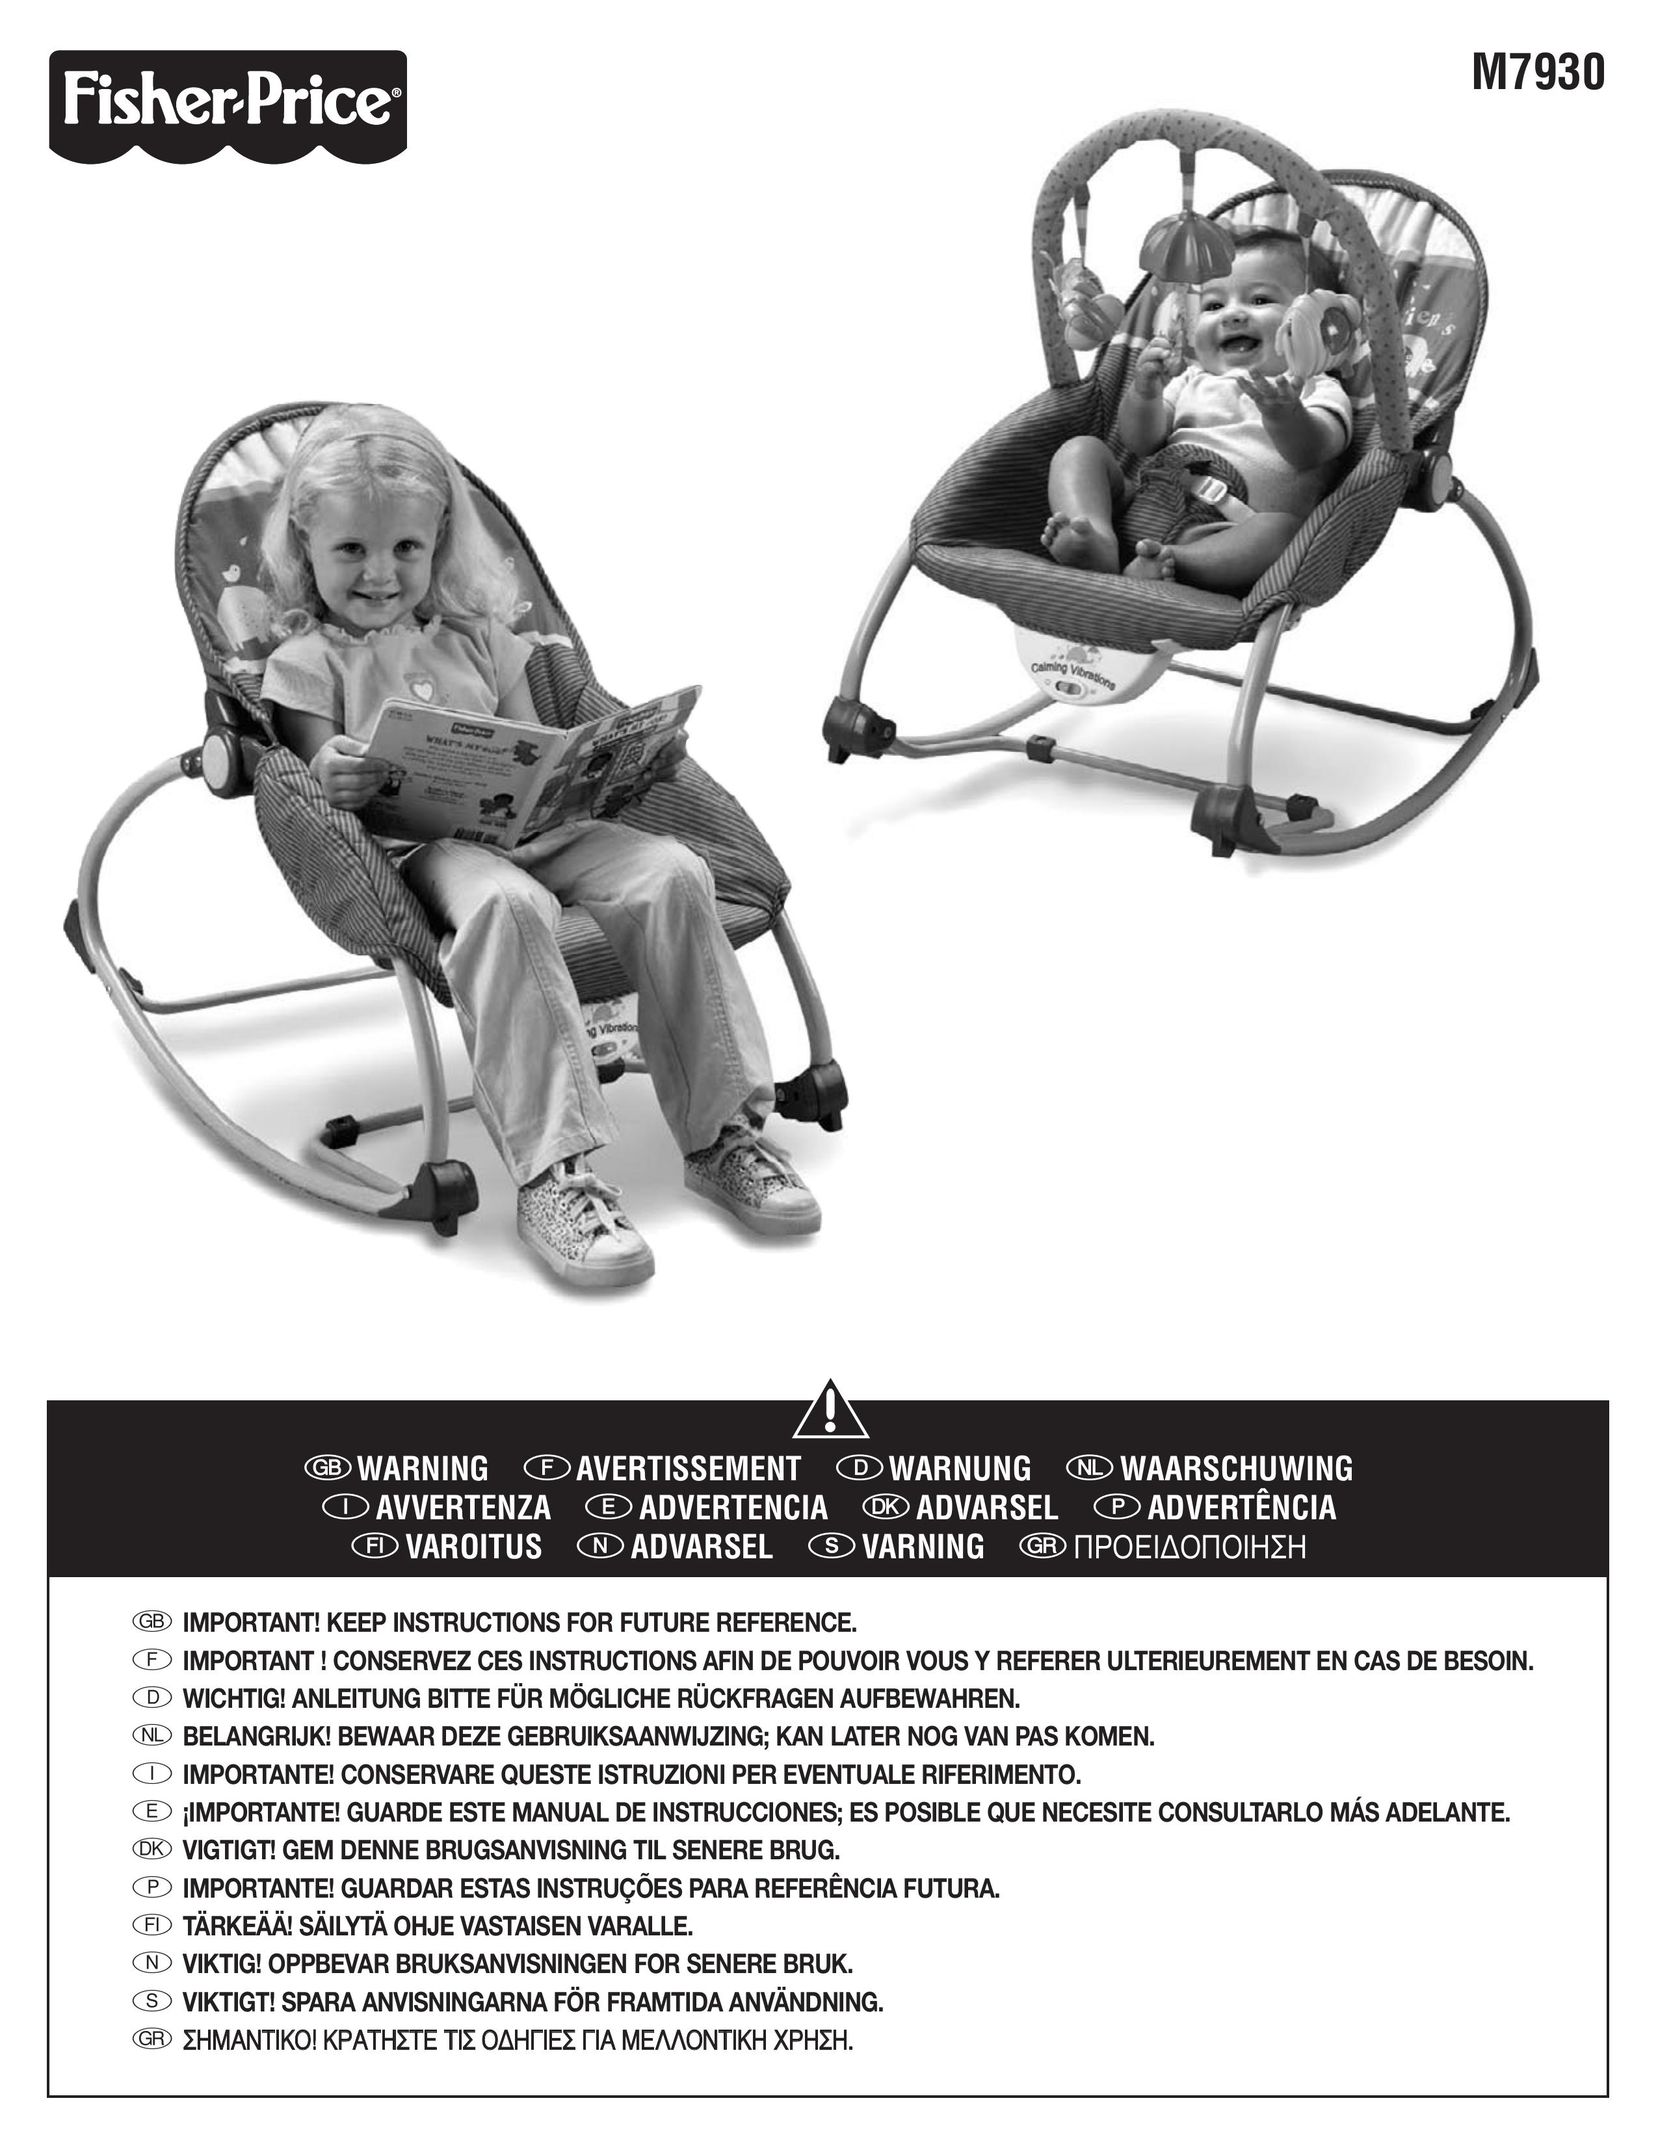 Fisher-Price M7930 Baby Furniture User Manual